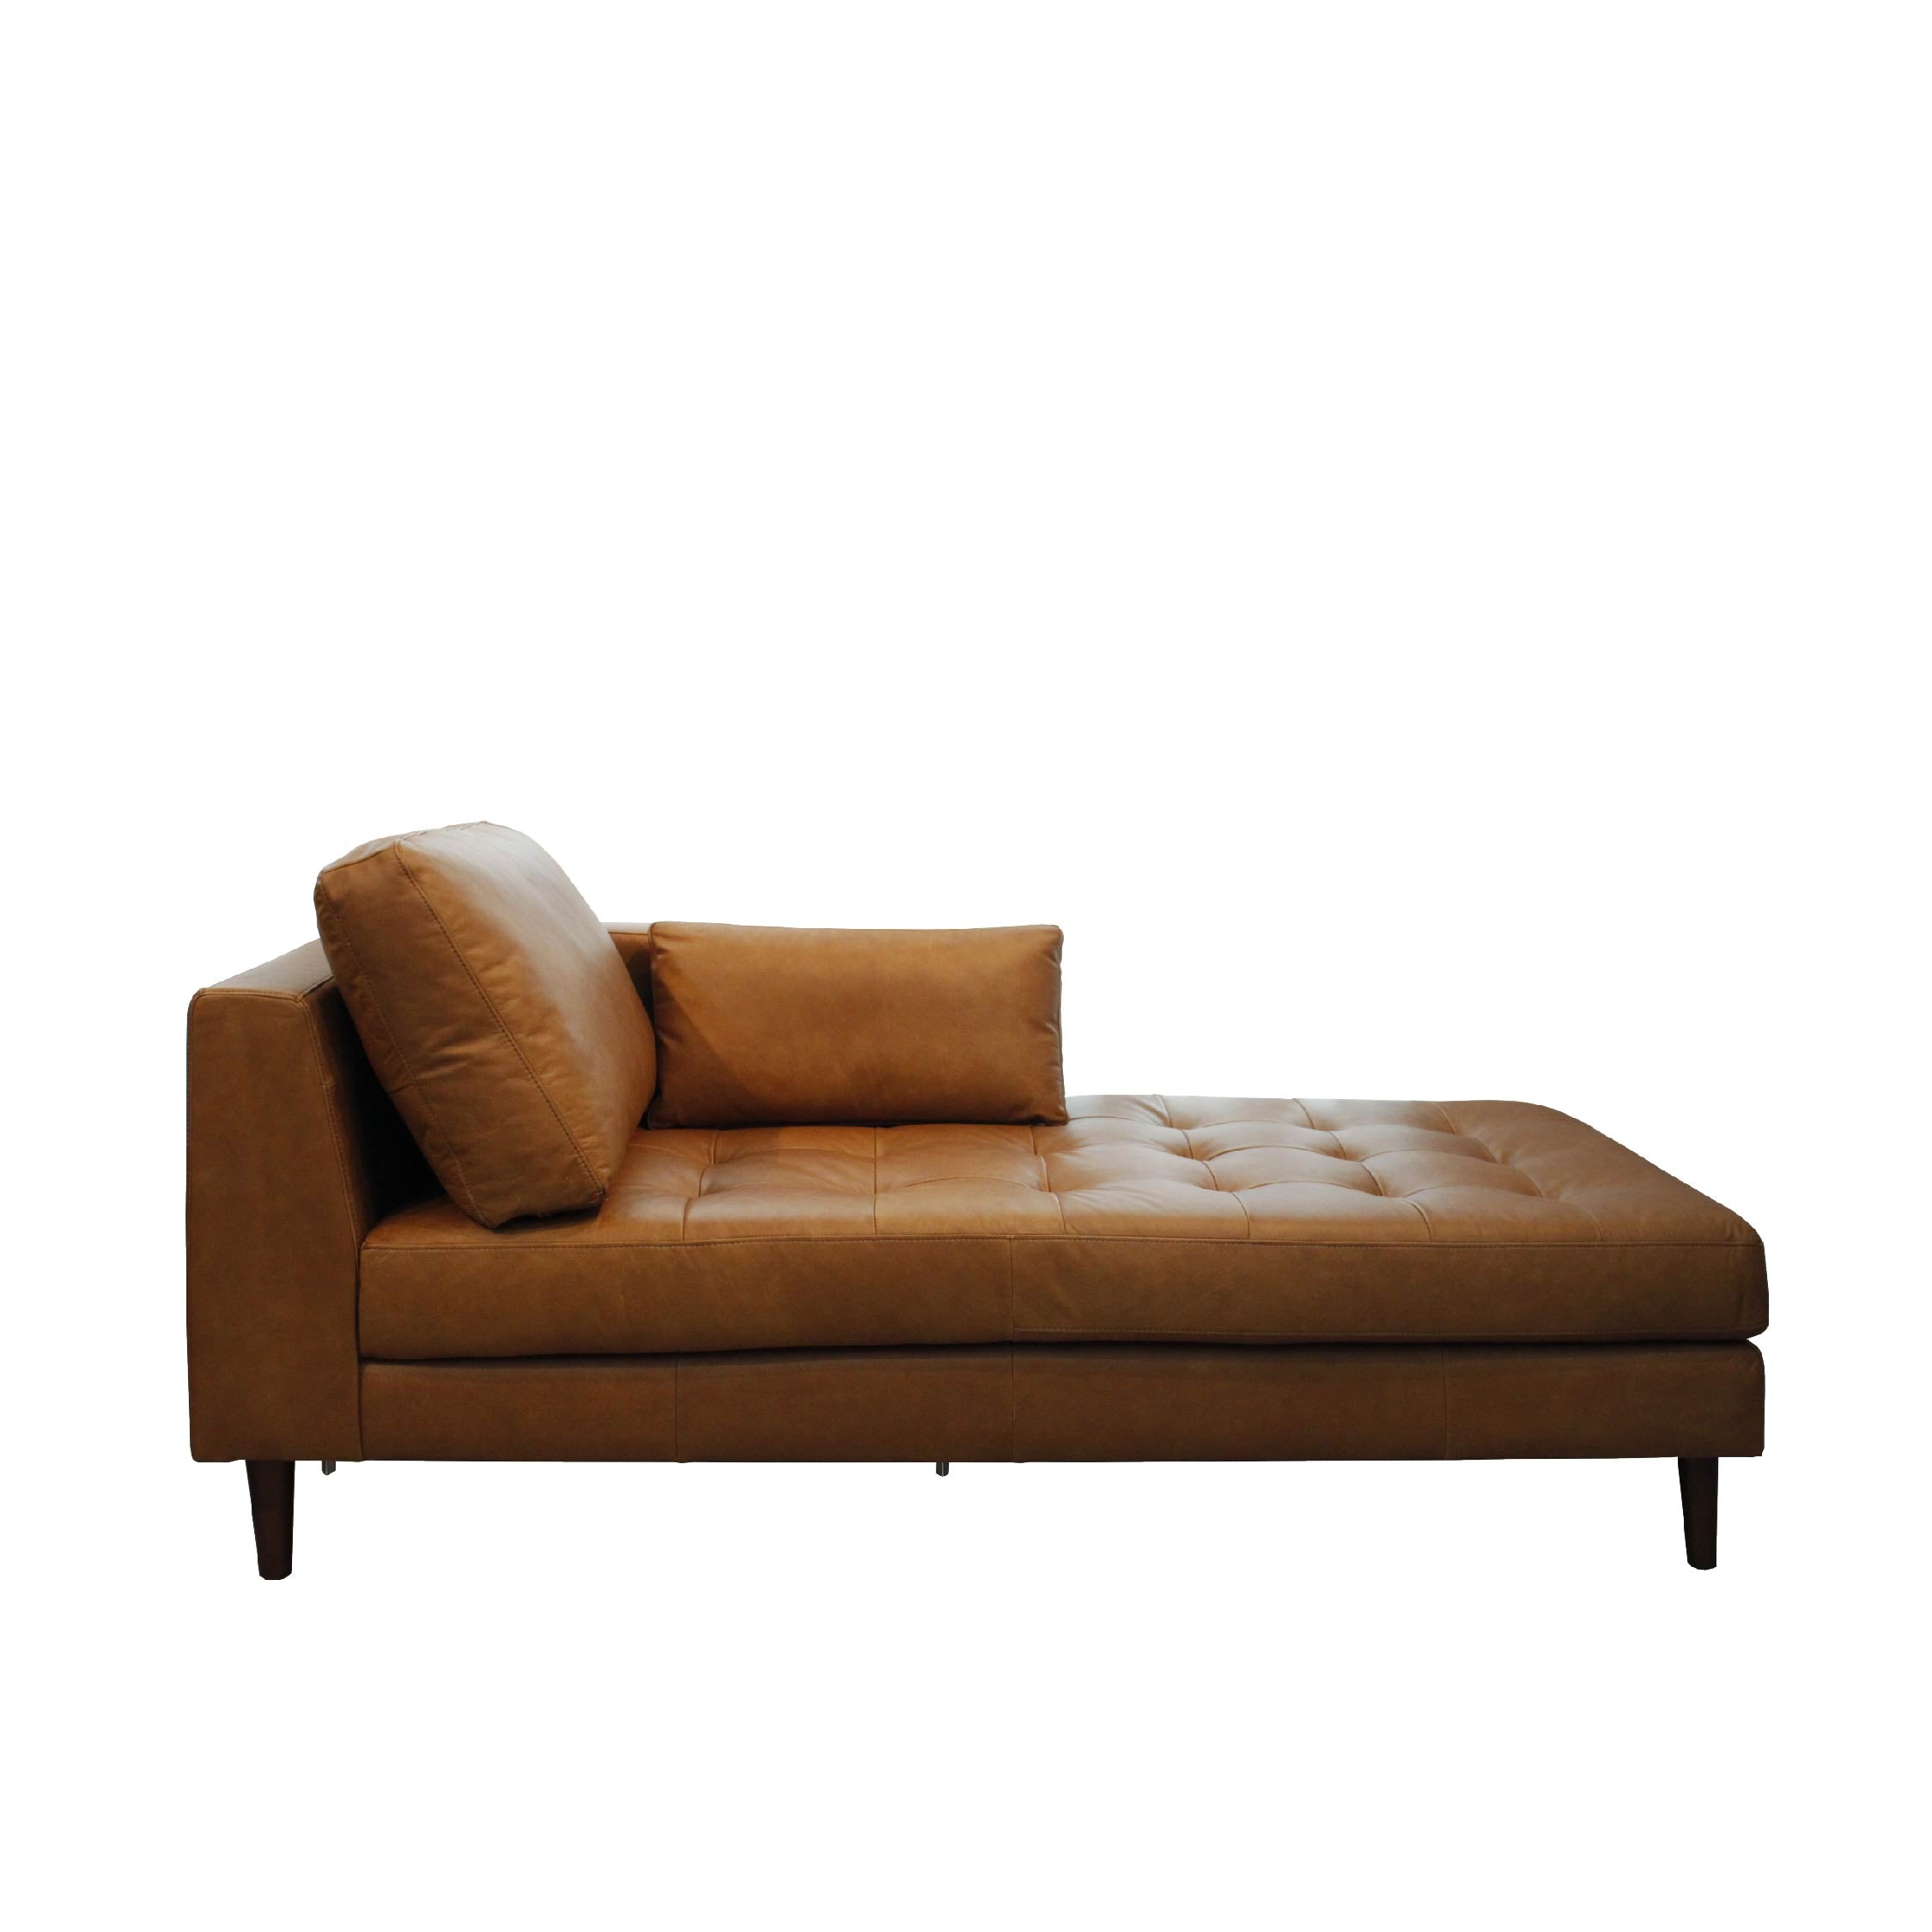 NORDI Sofa Right Chaise Fabric Premium